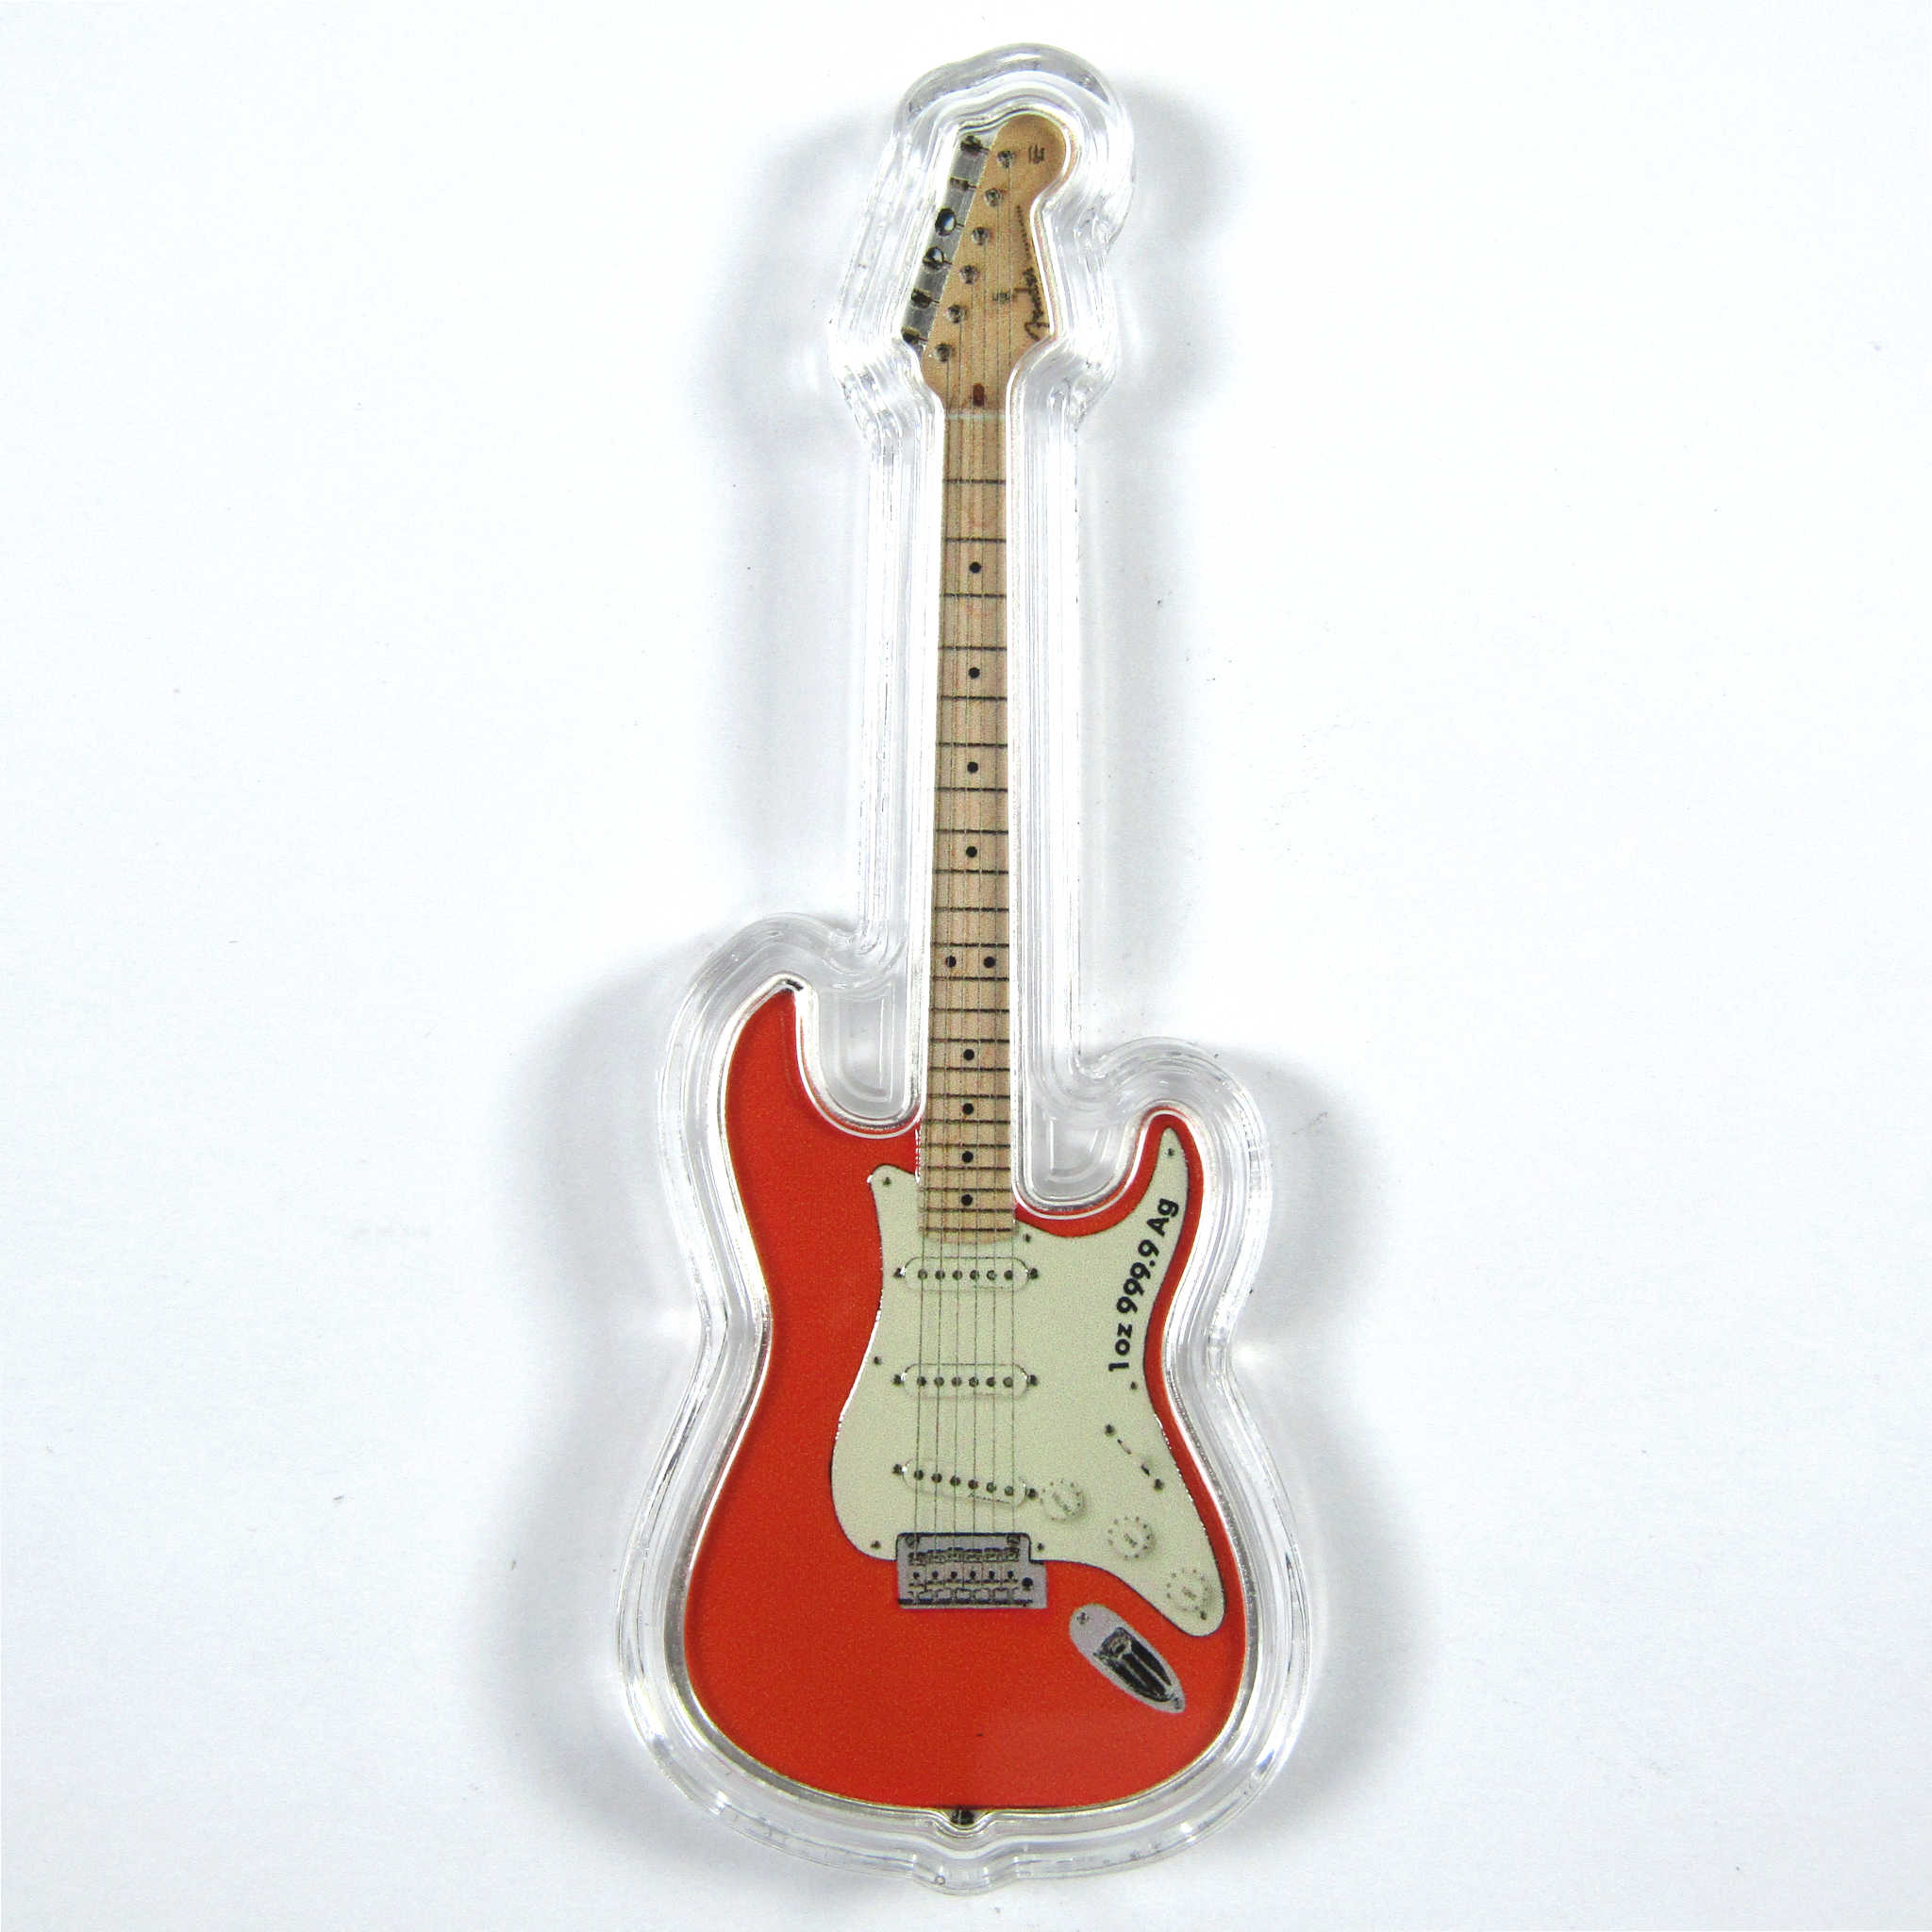 2022 Fender Stratocaster Guitar Uncirculated 1 oz Silver COA SKU:LW167